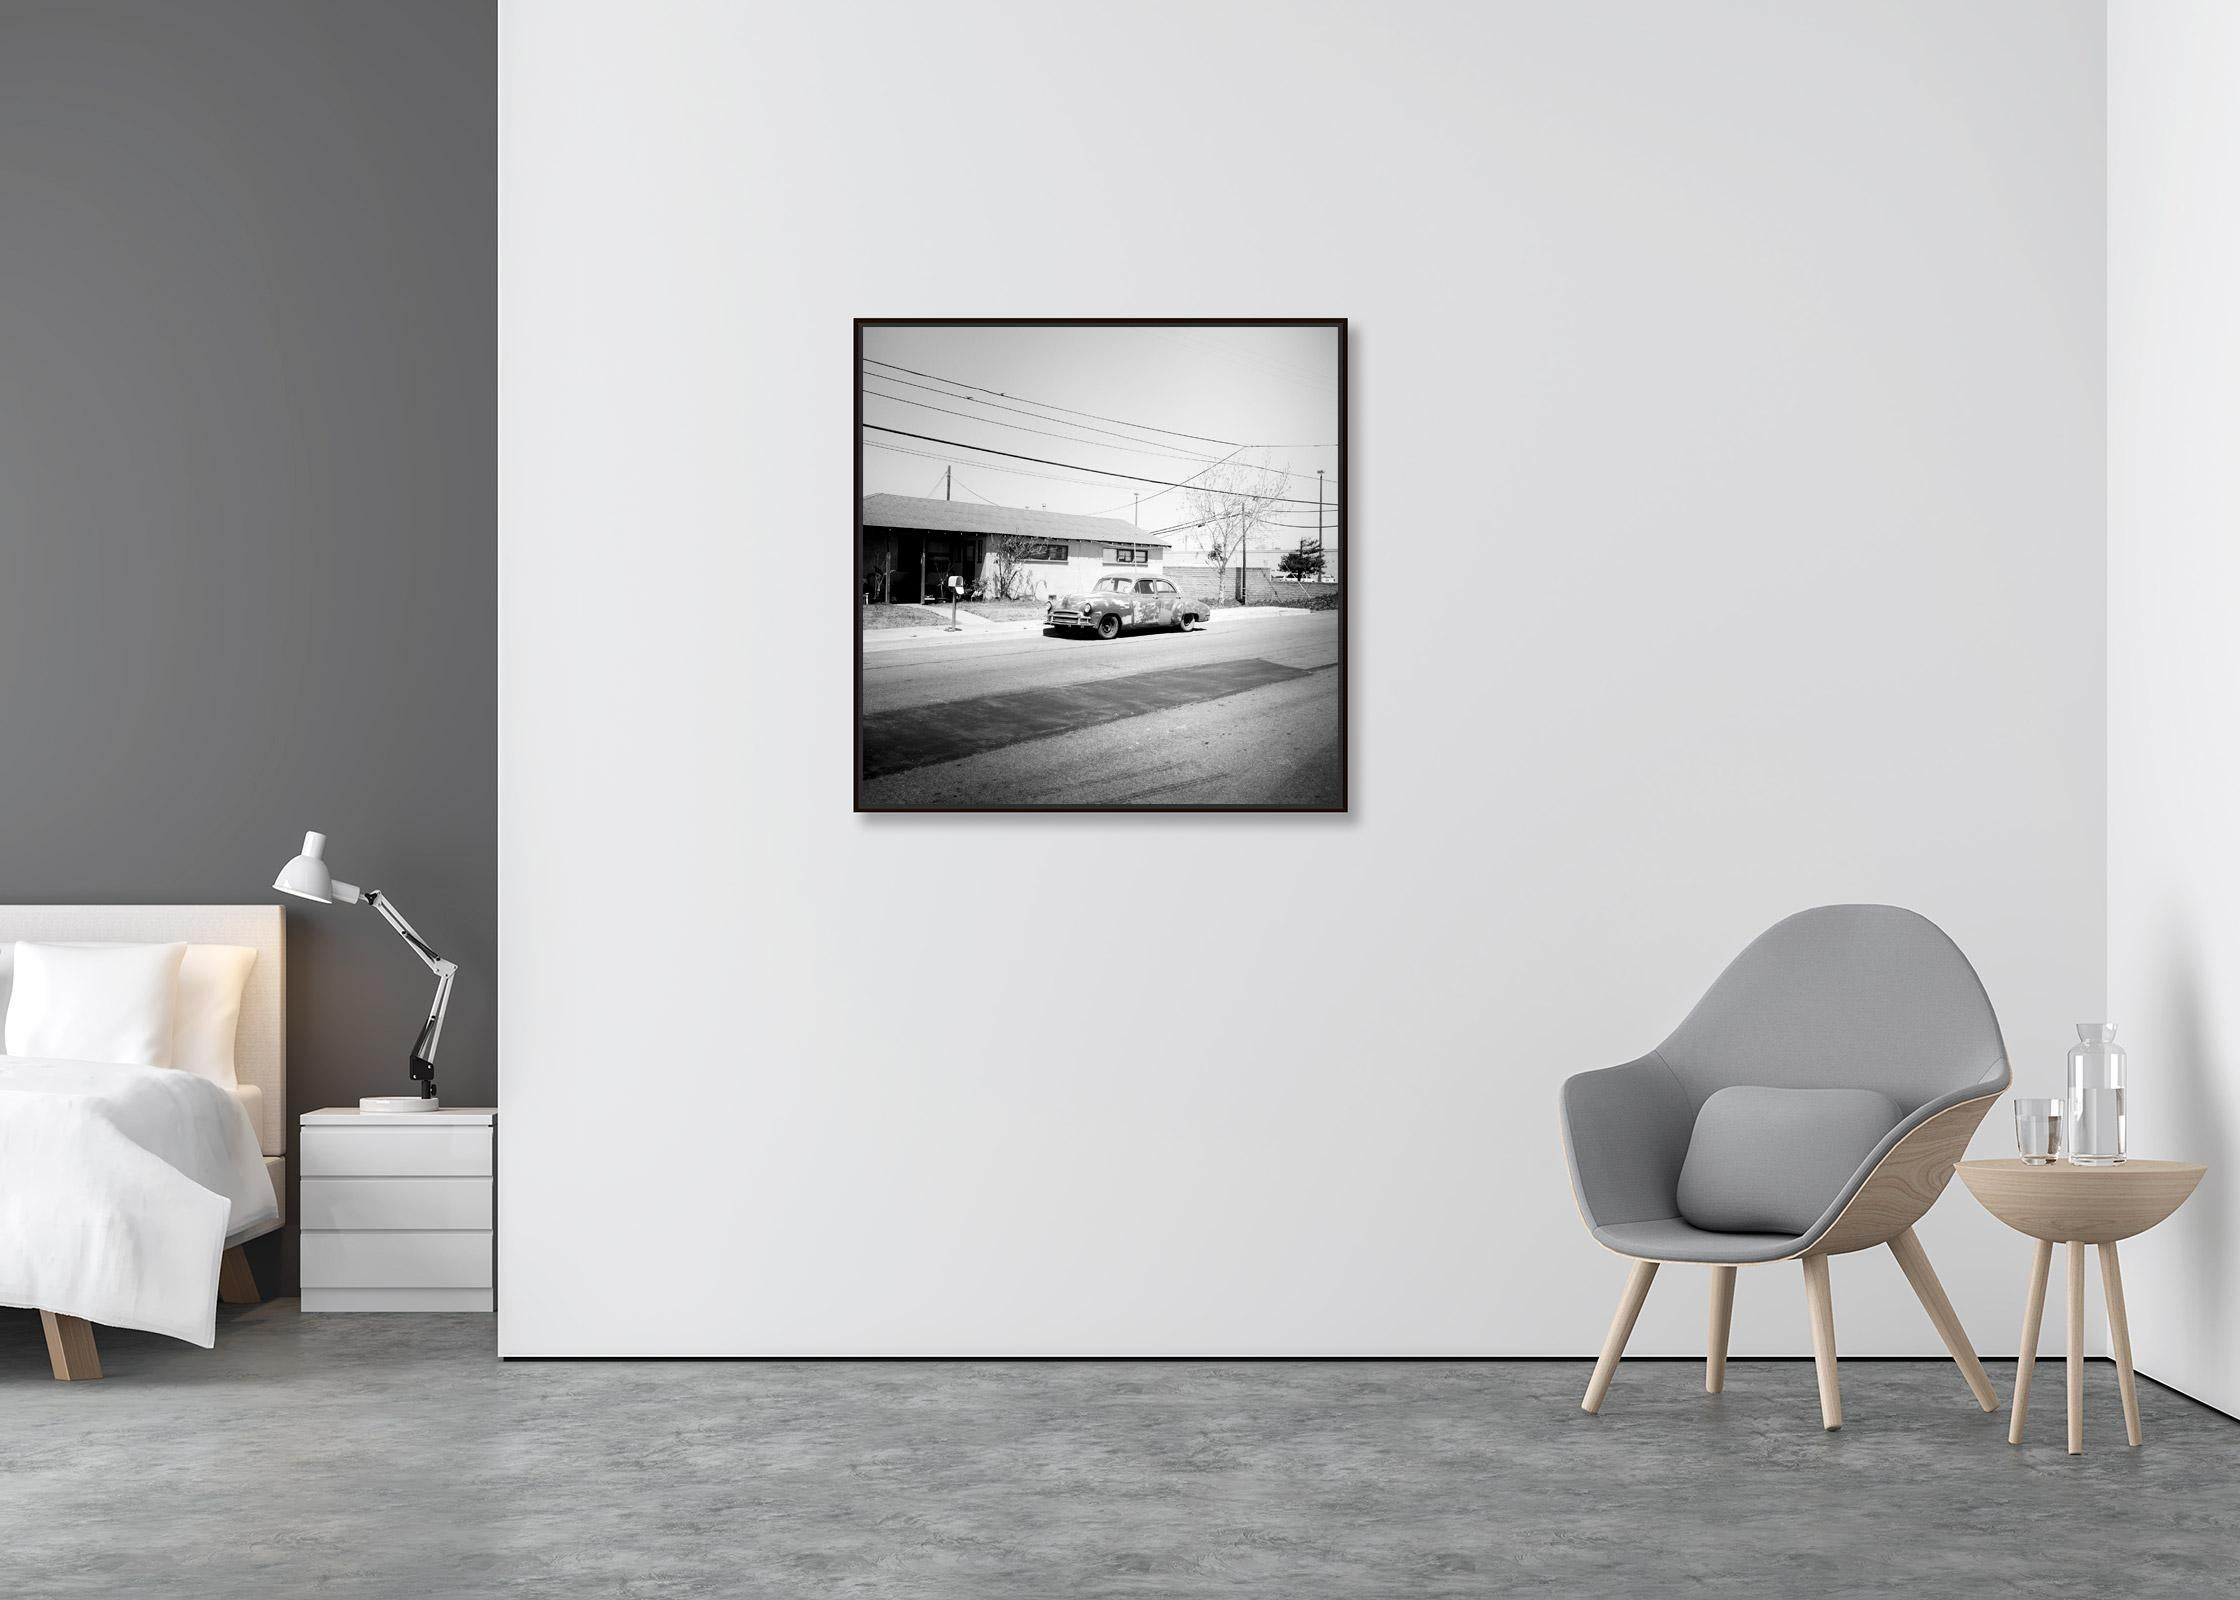 House, Classic Car, Arizona, USA, Black & White landscape photography art print - Contemporary Photograph by Gerald Berghammer